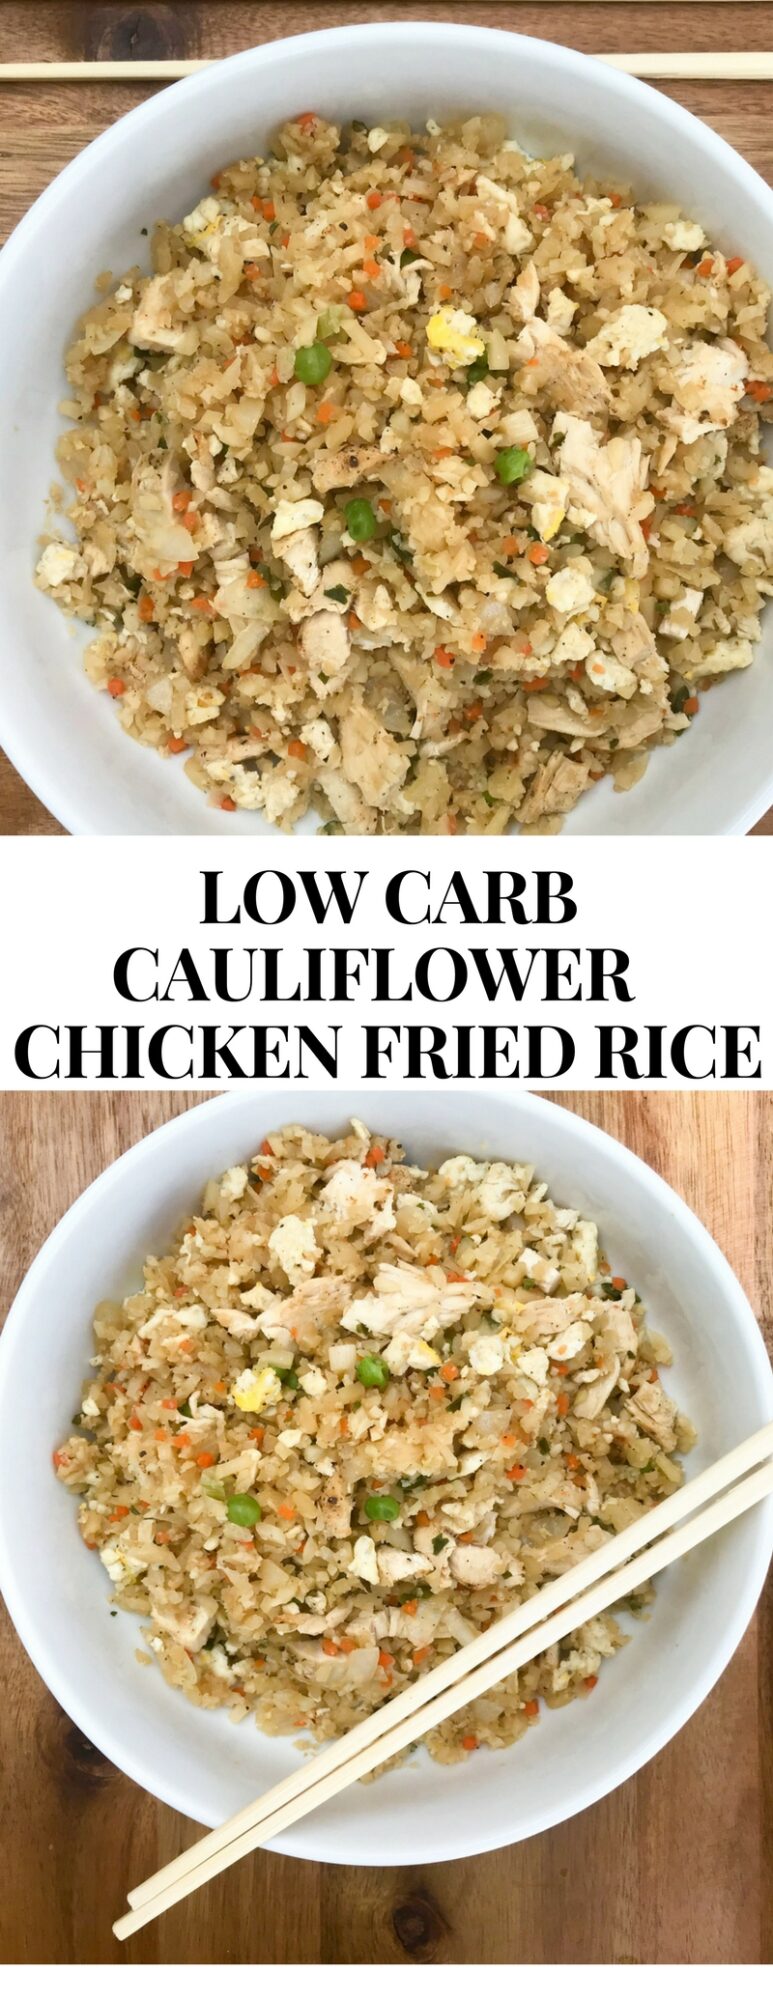 Low Carb Cauliflower Chicken Fried Rice.